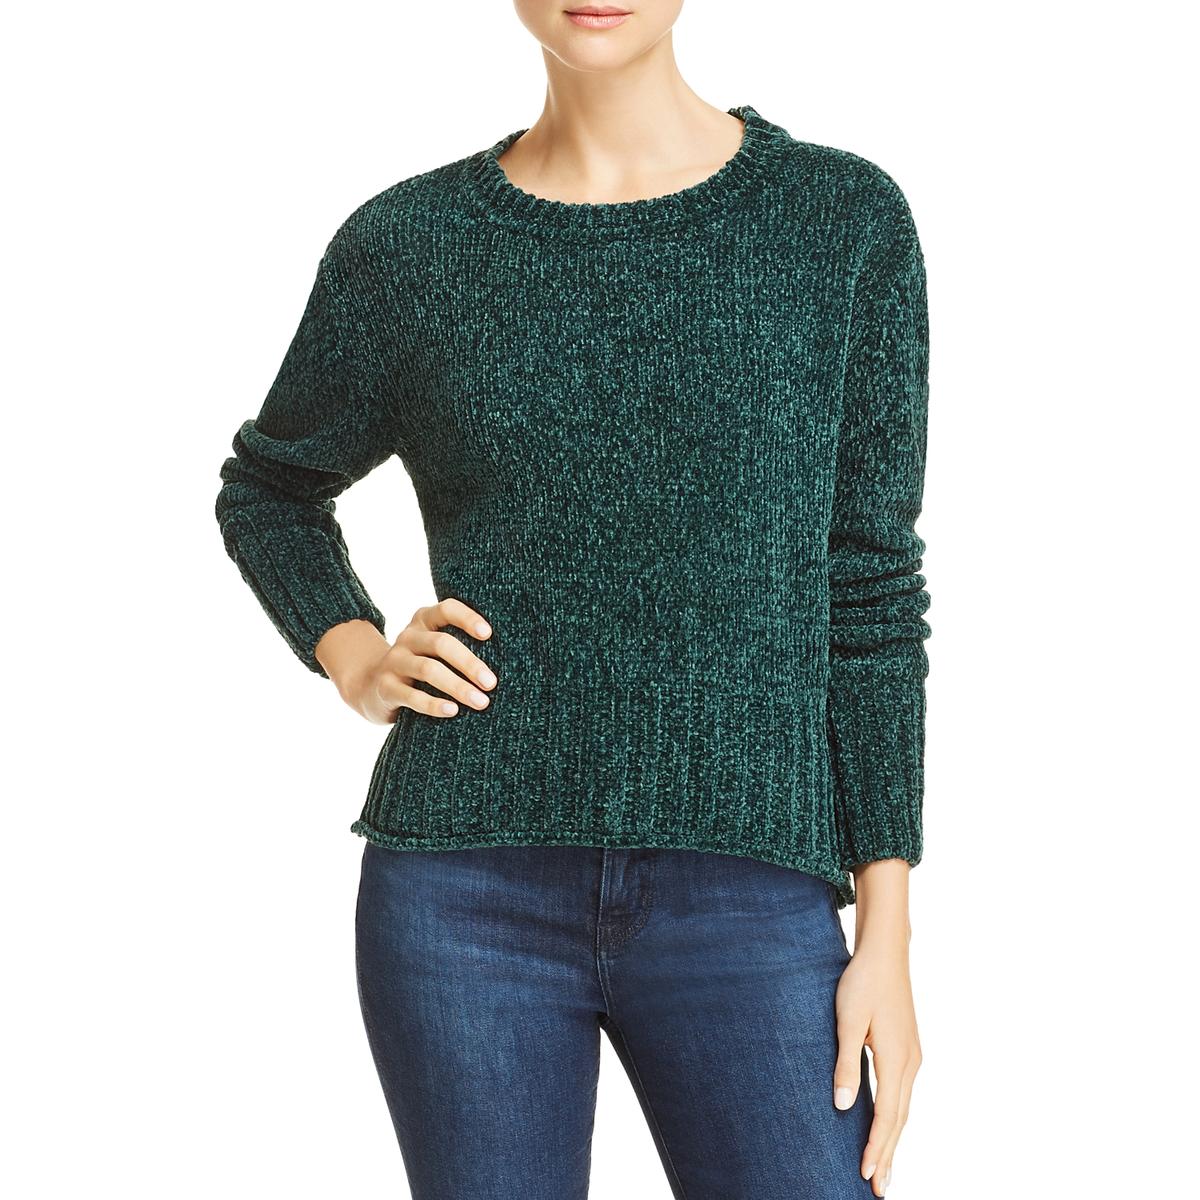 Aqua Womens Green Knit Winter Daytime Pullover Sweater Top M BHFO 3407 ...